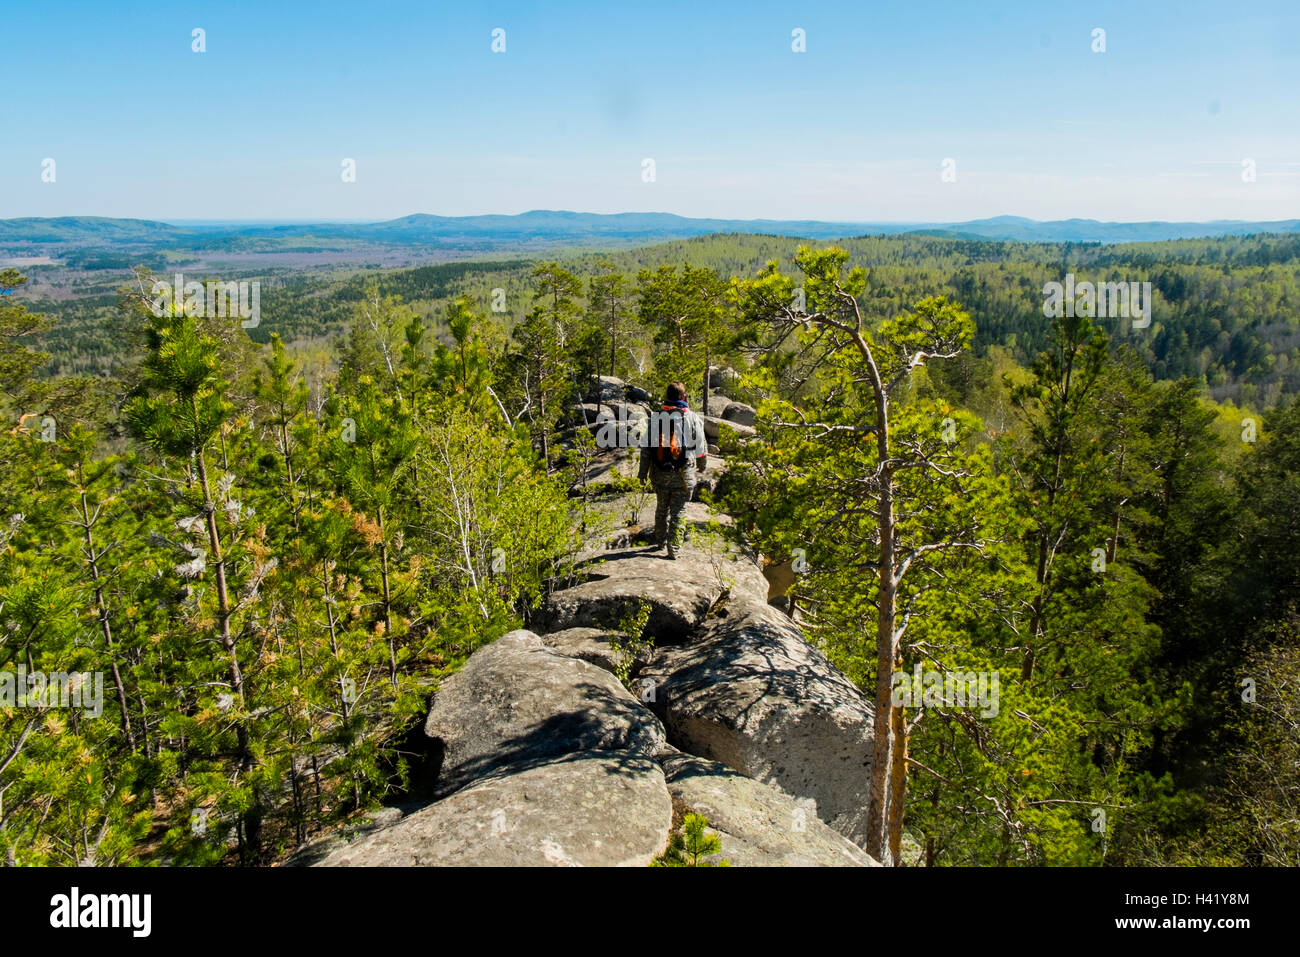 Caucasian man walking on mountain rock admiring scenic view Stock Photo